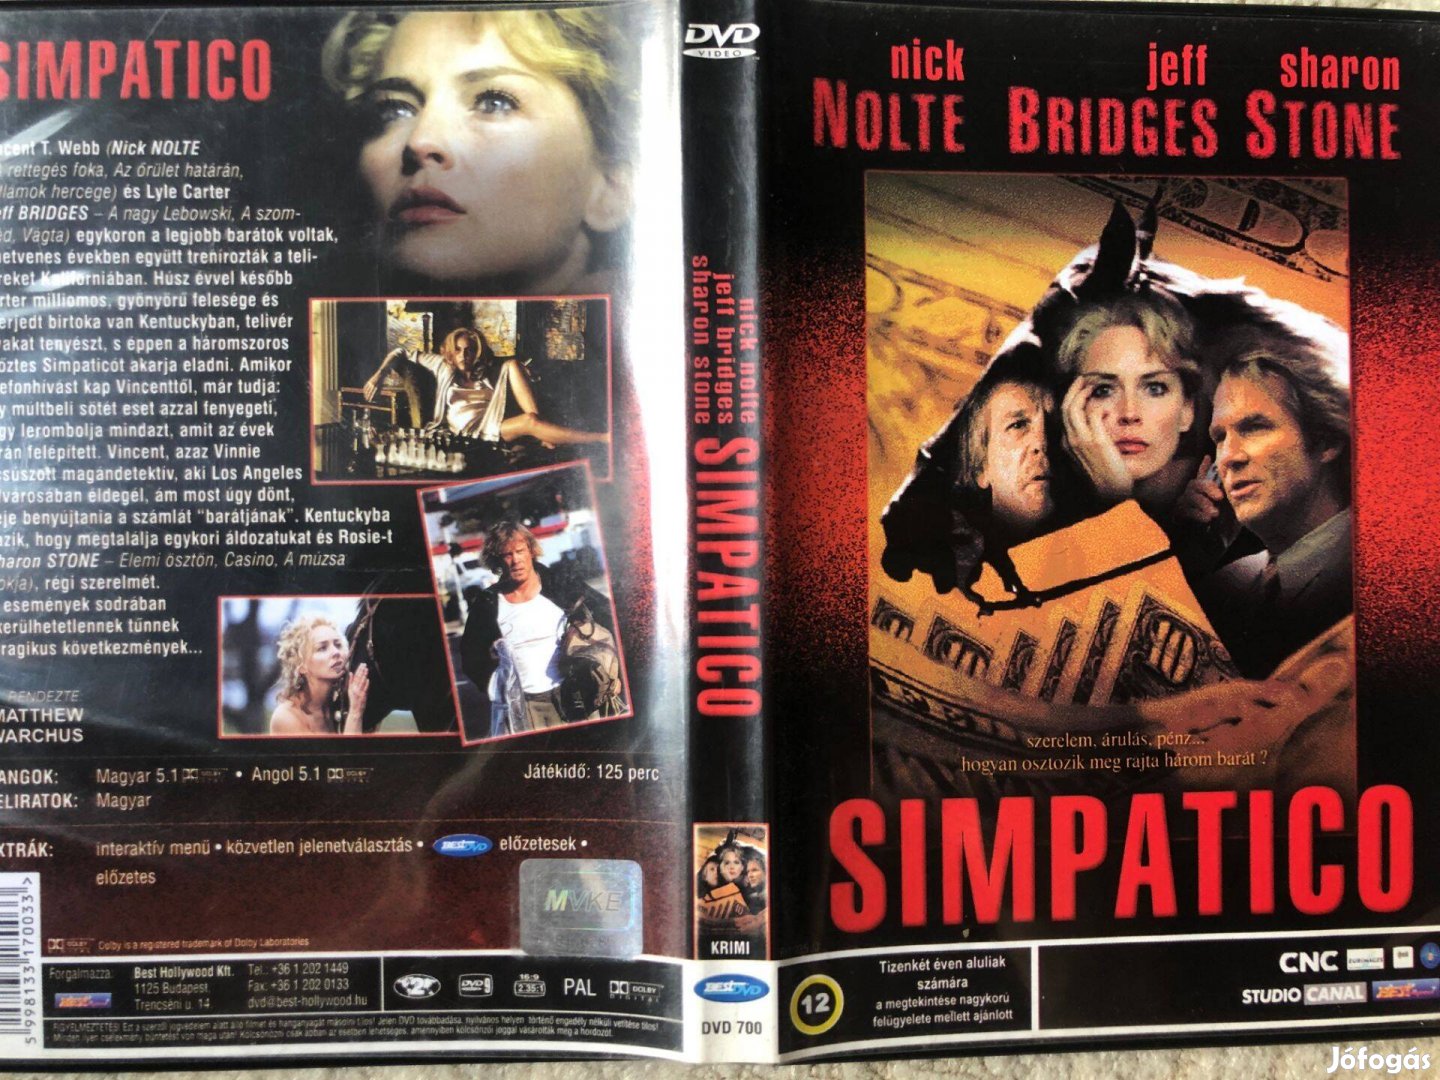 Simpatico (karcmentes, Sharon Stone, Bestdvd kiadás) DVD